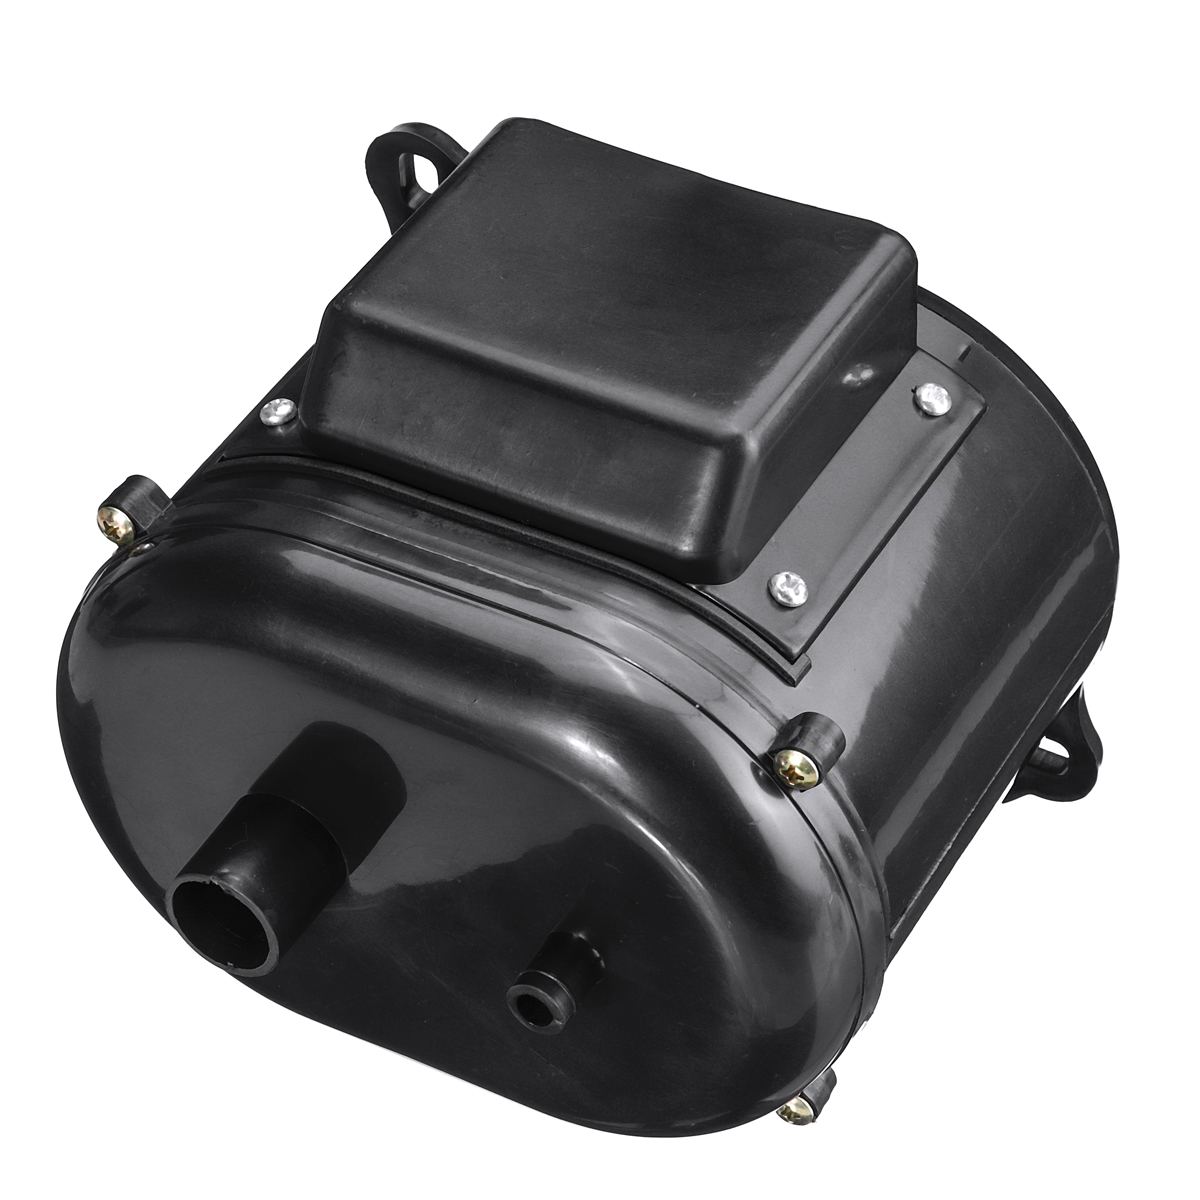 25mm-Heater-Air-Intake-Filter-Silencer-For-Dometic-Eberspacher-Webasto-Diesel-Heater-1595035-7